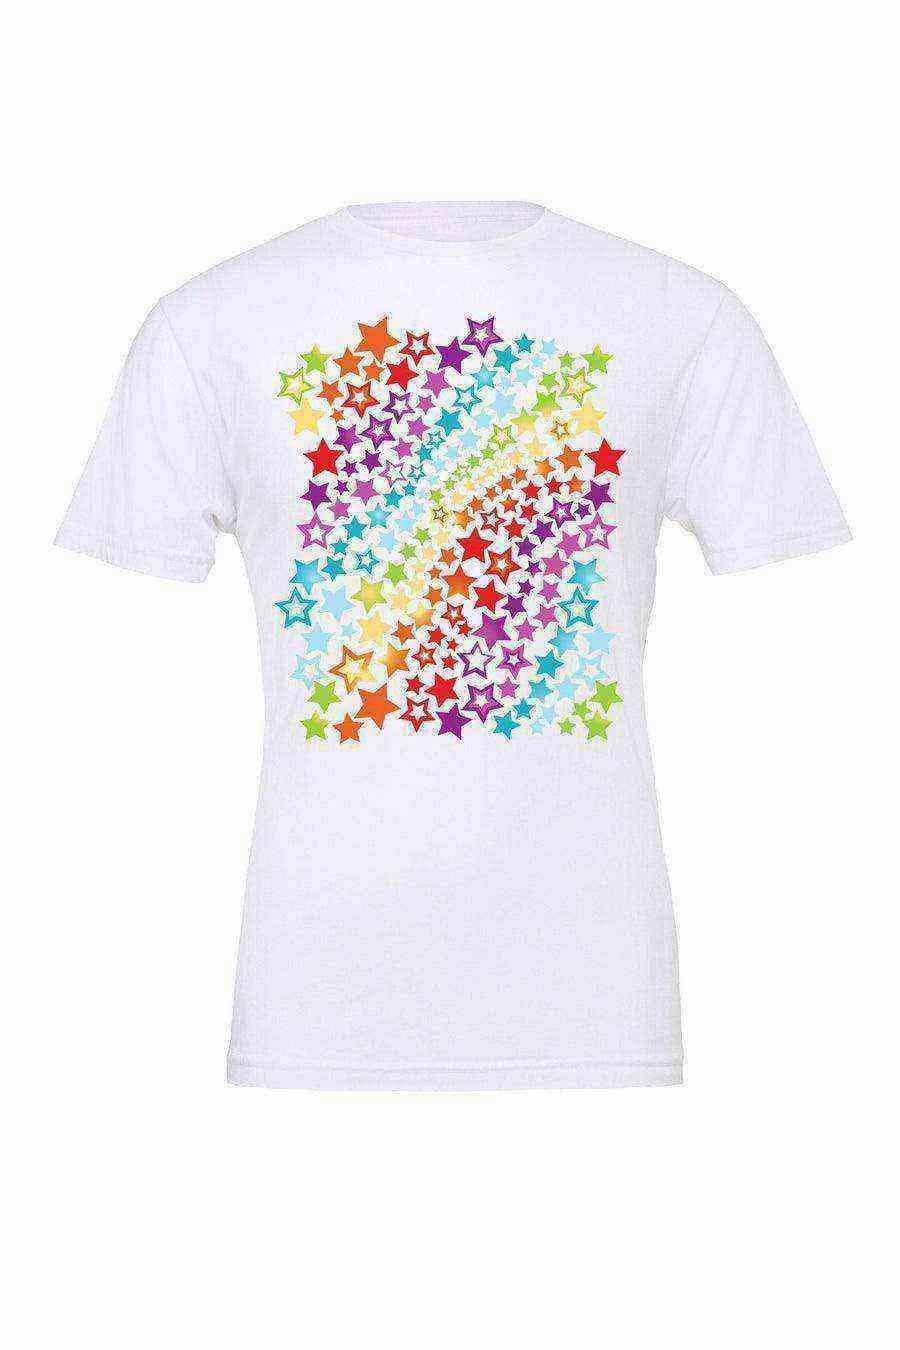 Toddler | Rainbow Stars Shirt | Graphic Tee - Dylan's Tees